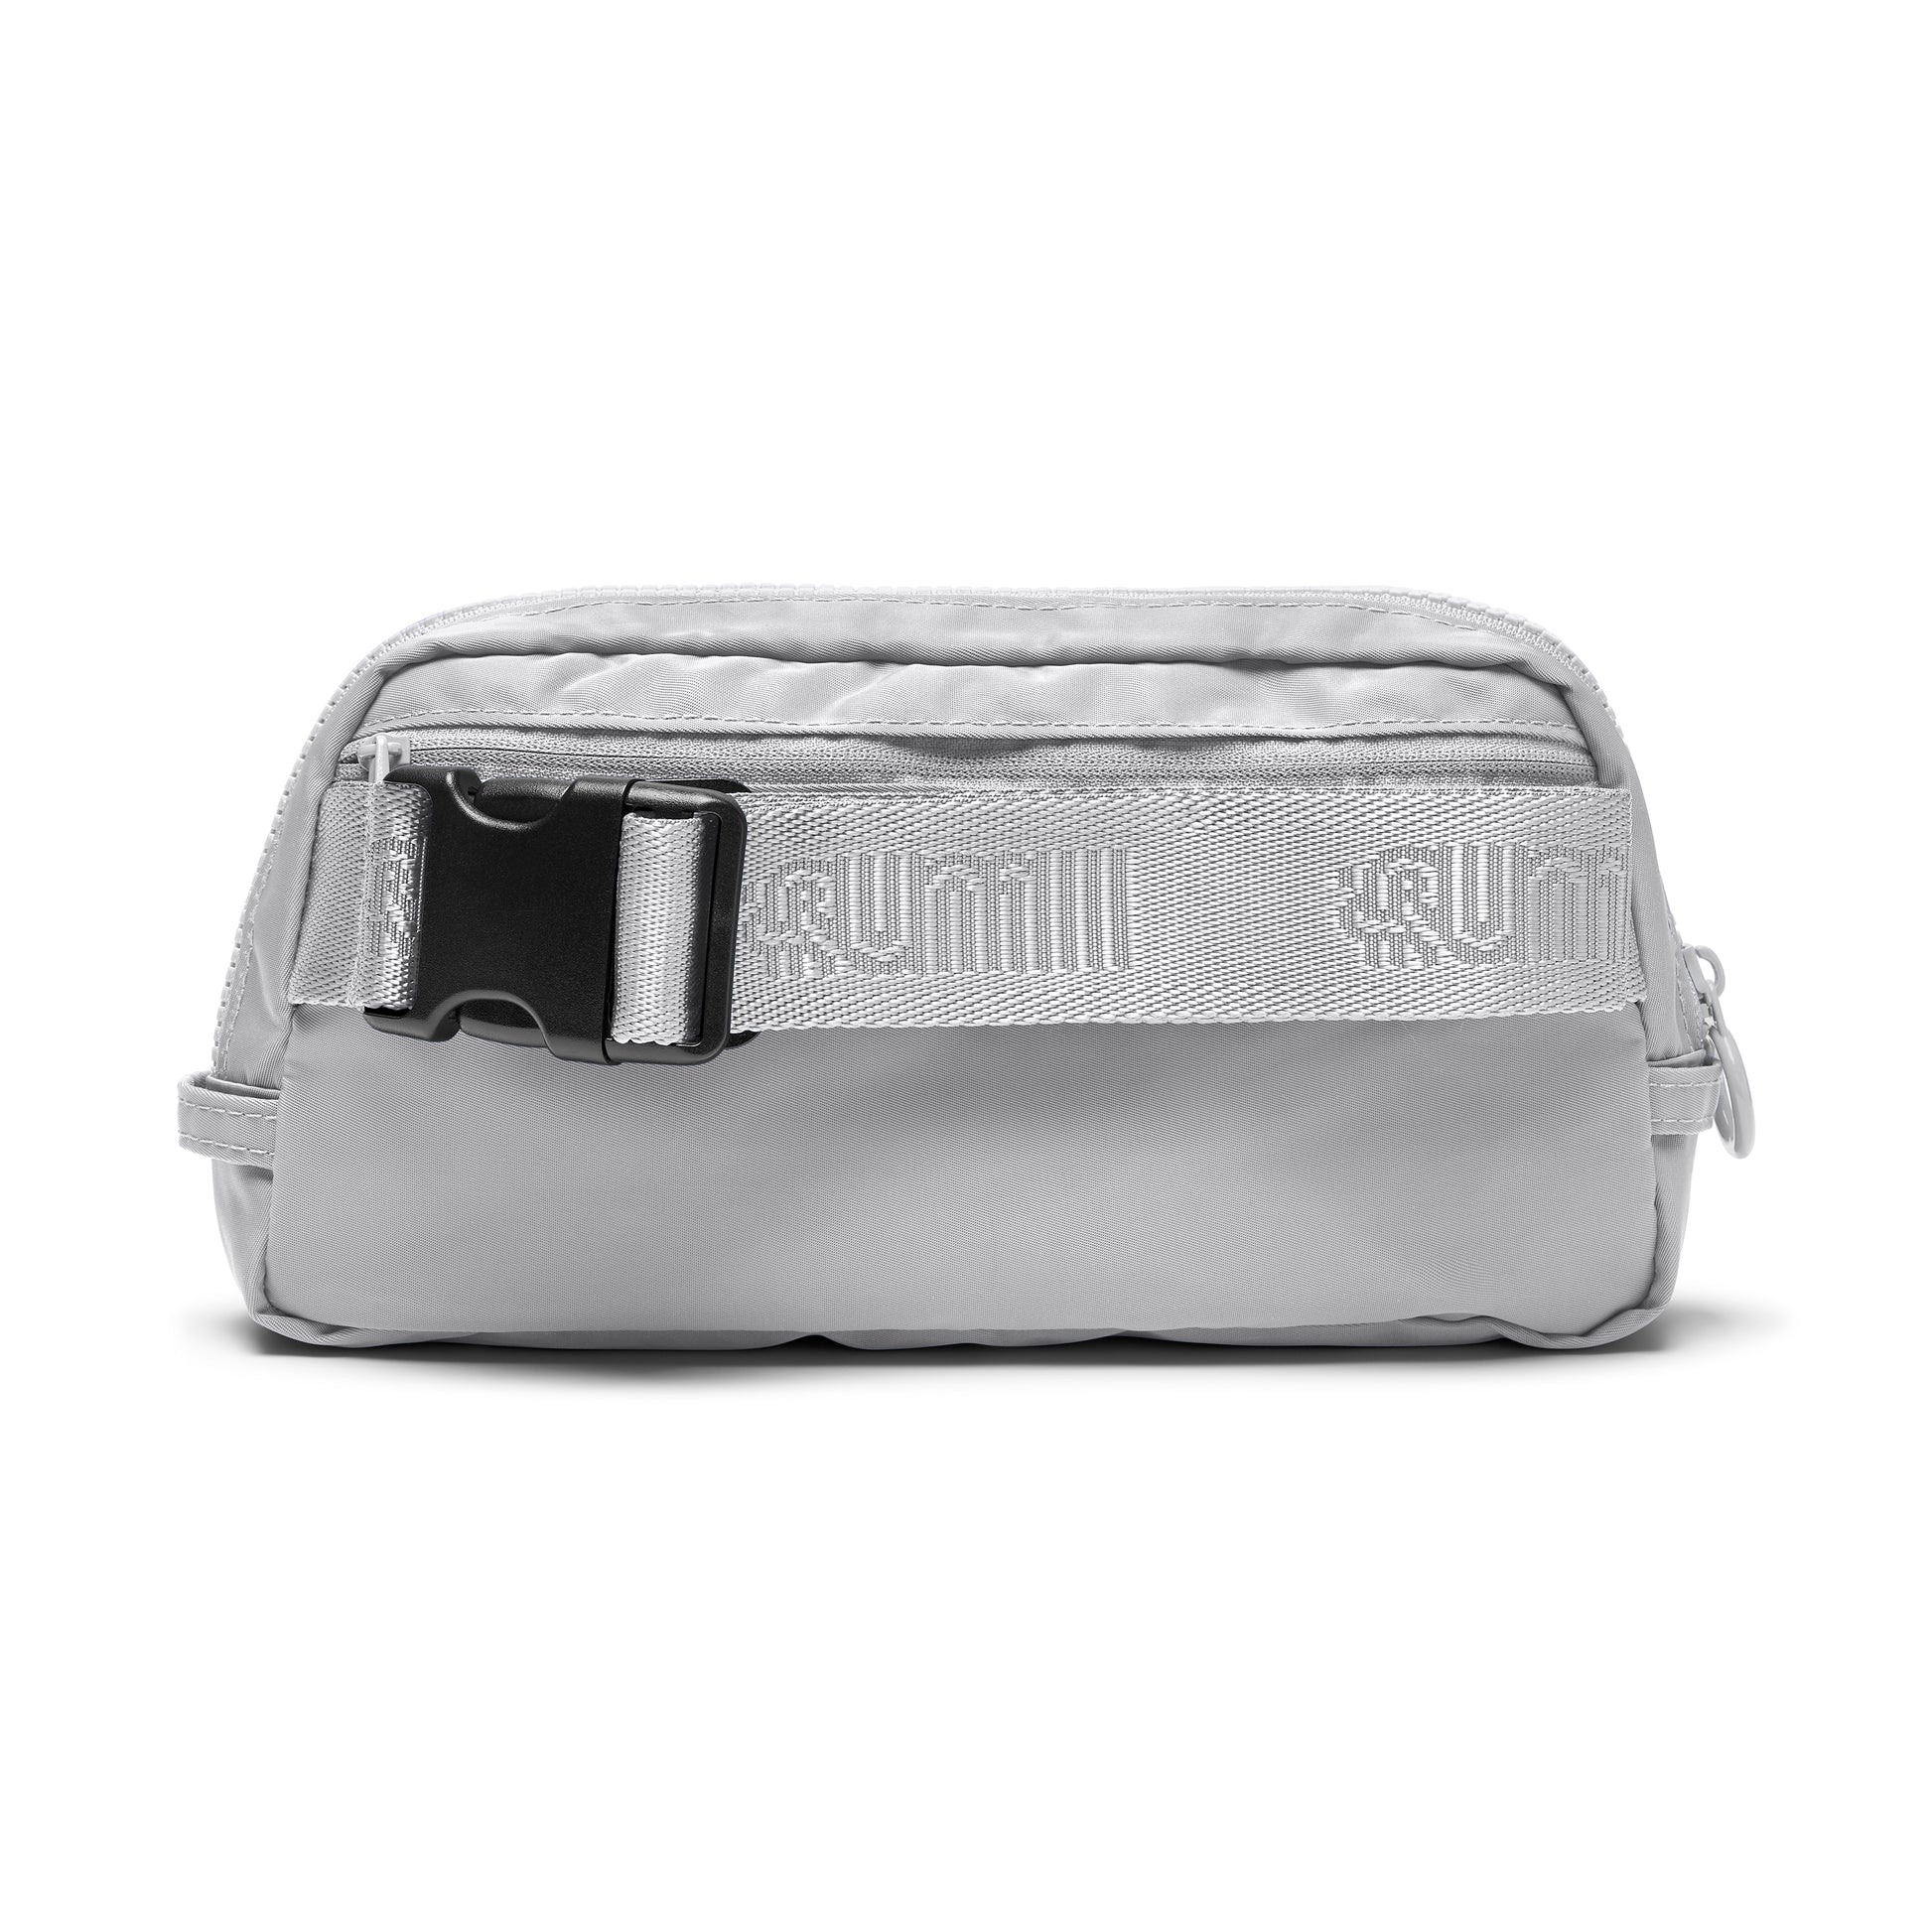 Grey Rumii Essential Bag for nurses